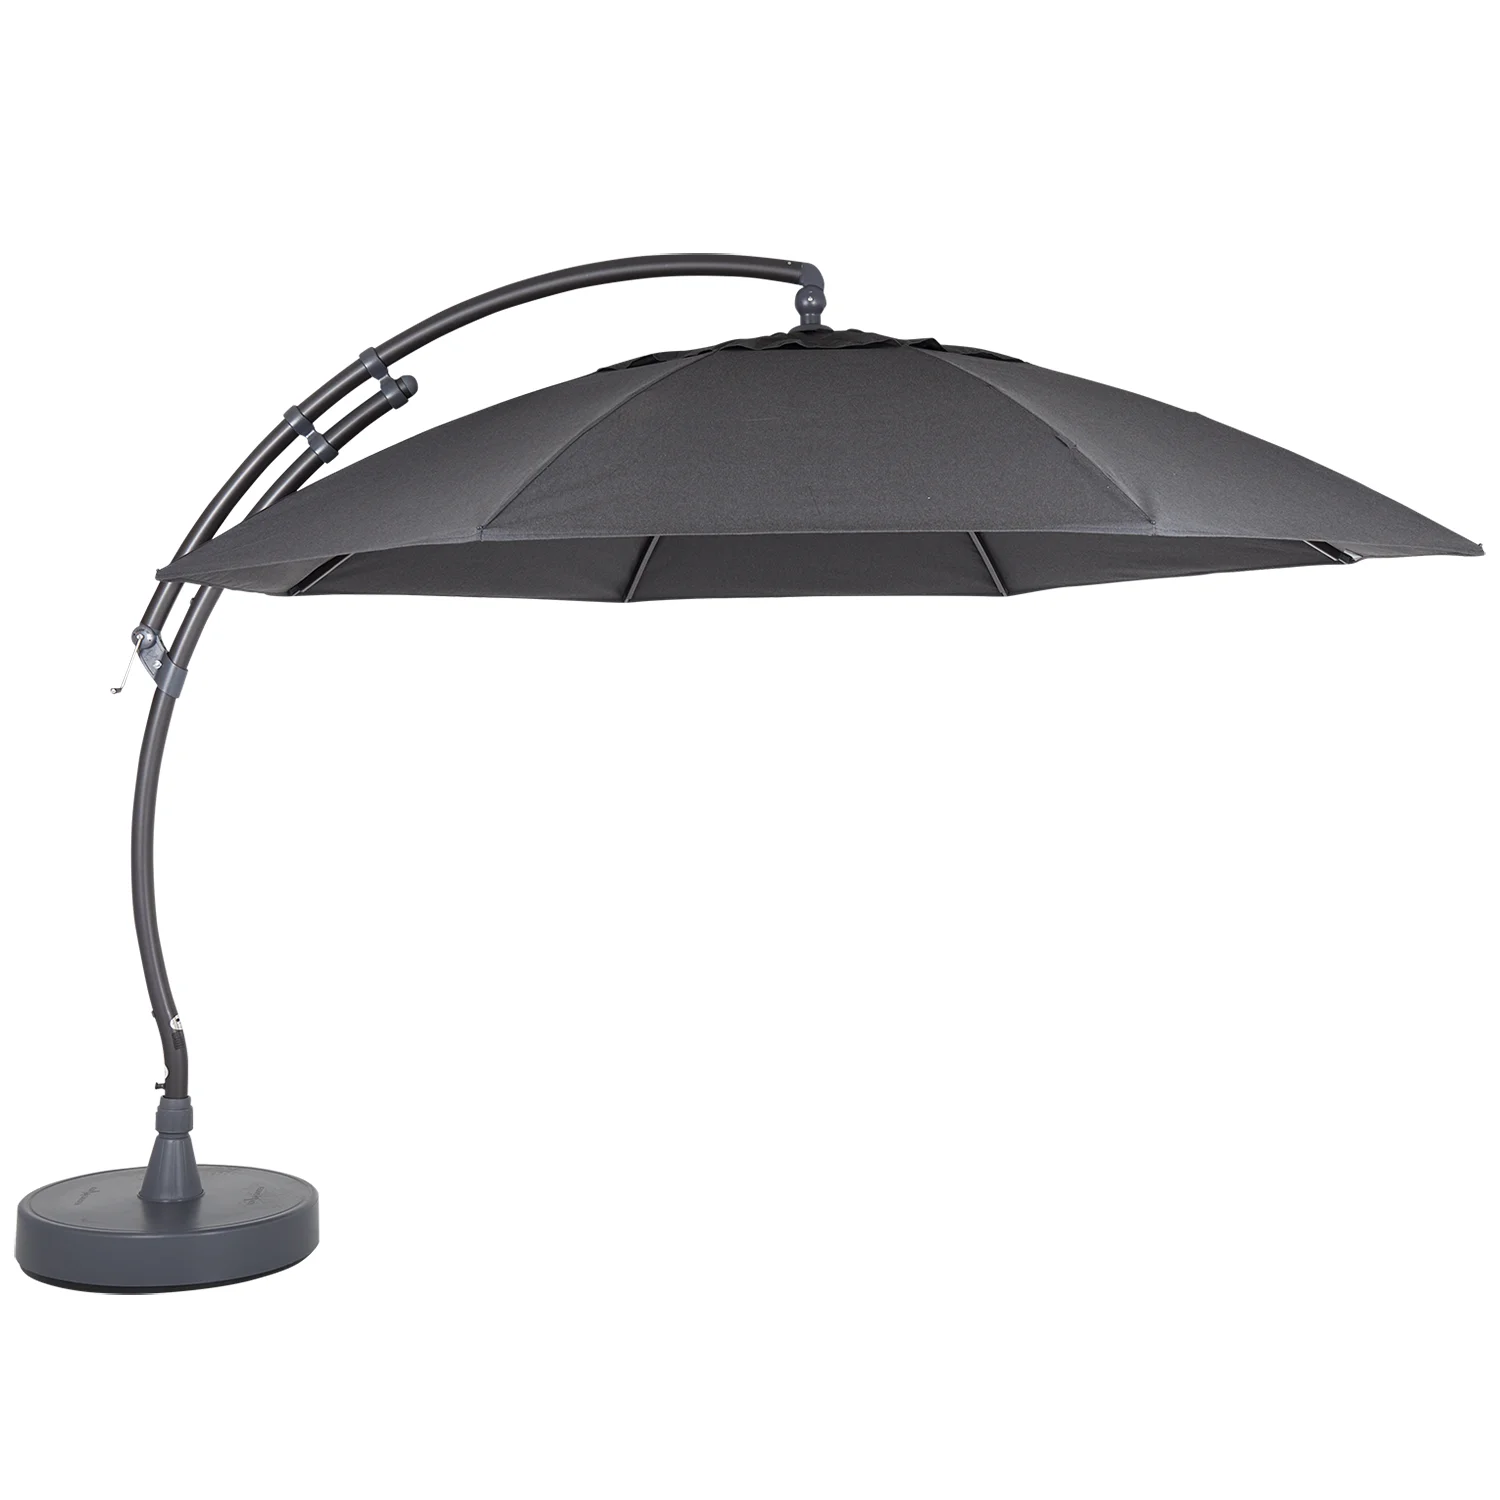 Easy Sun frihängande parasoll antracit/antracit, Ø375 cm